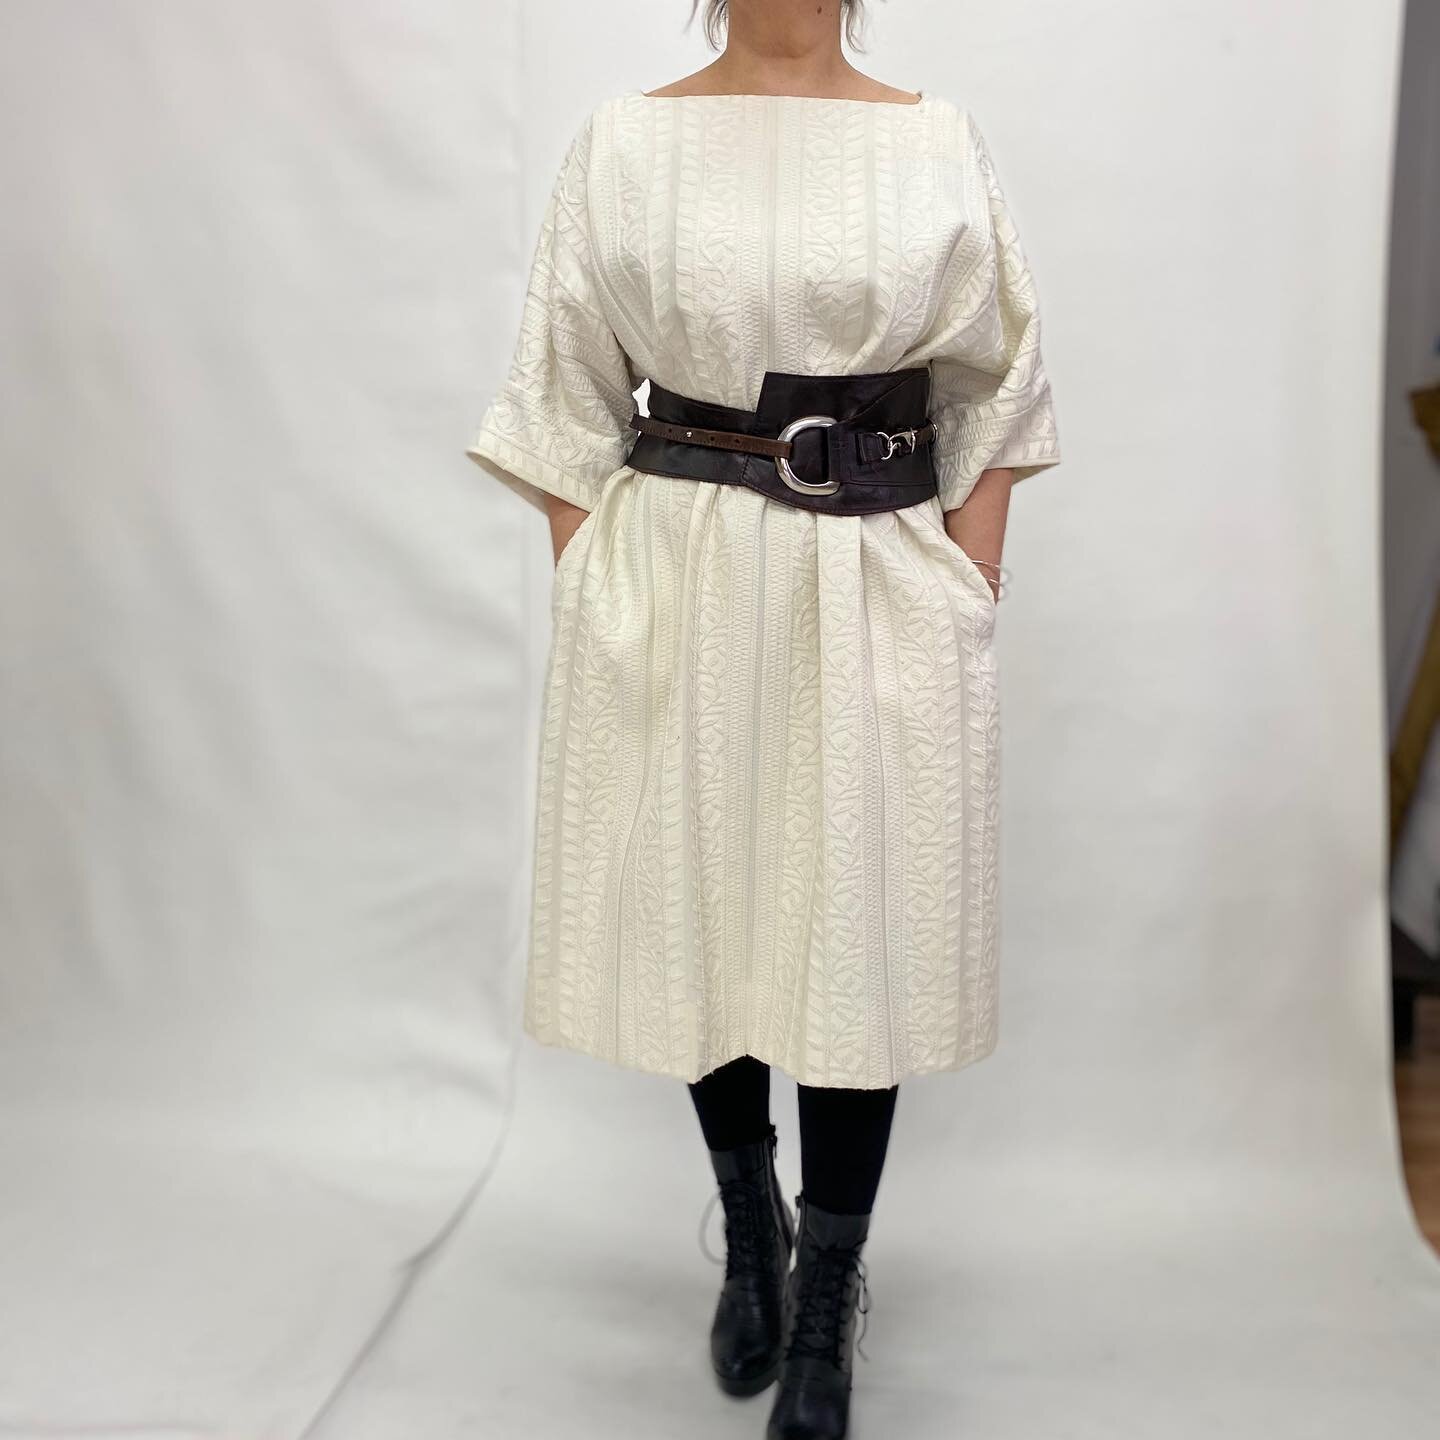 Ahhhh!This dress!!!One of a kind,100% jacquard cotton!Belt is not included(but you can have it😃)One size-fits modern,urban women!
#offwhitedress #urbanfashion #fashionover50 #winterwear #oneofakind #slowfashionmovement #minimalistfashion #minimalist